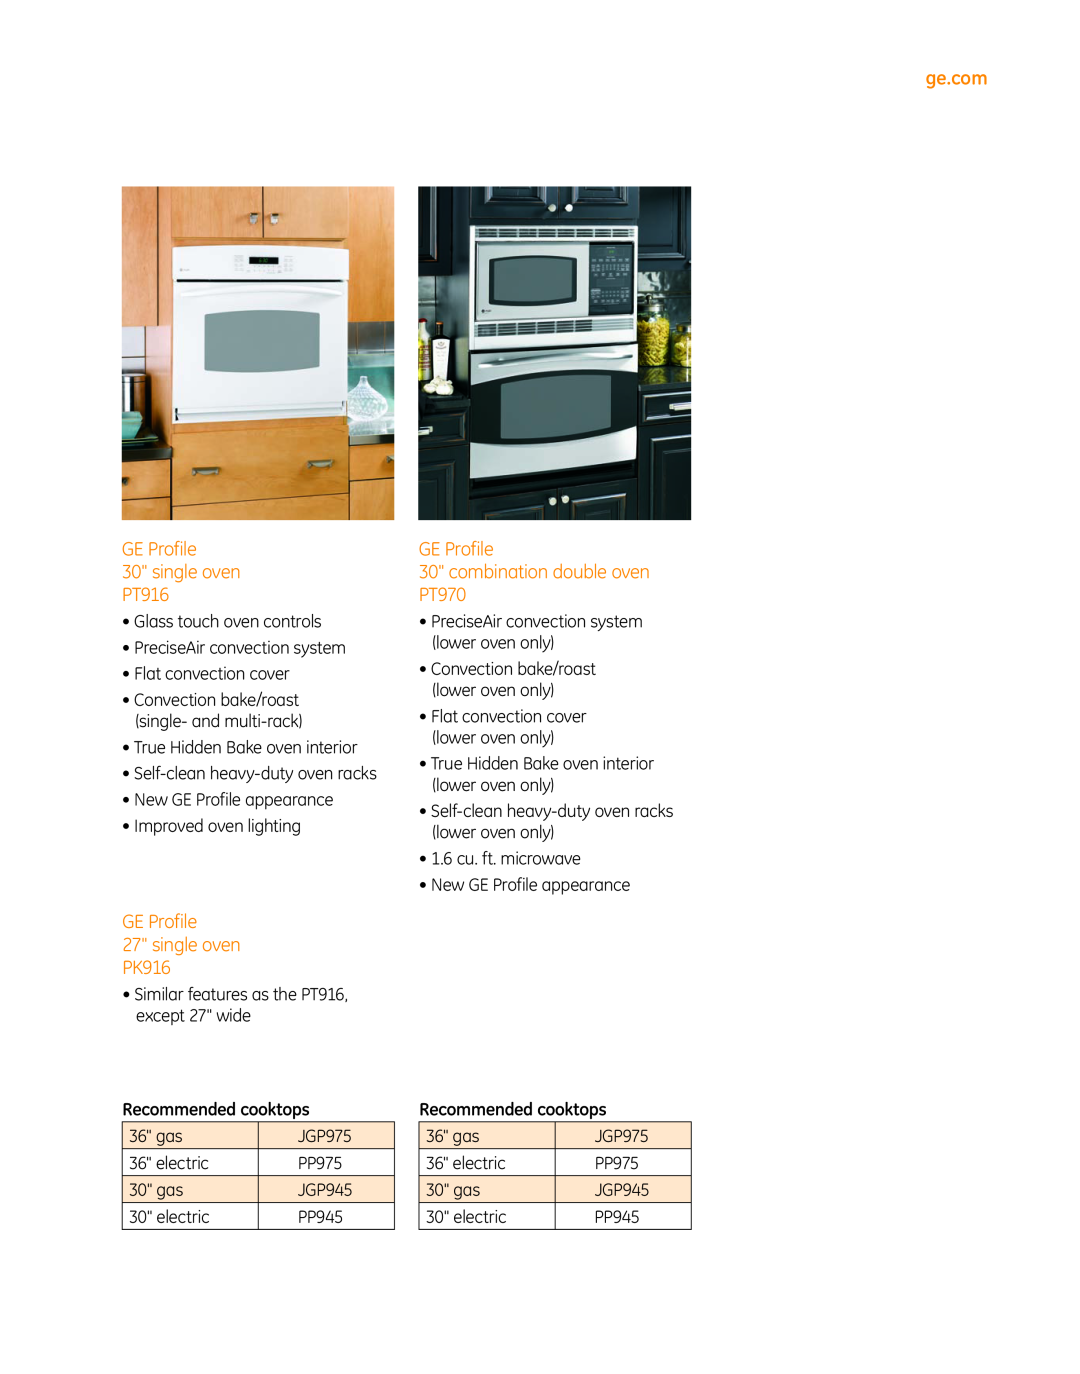 GE PT920 GE Profile 30 single oven PT916, GE Profile 27 single oven PK916, GE Profile 30 combination double oven PT970 